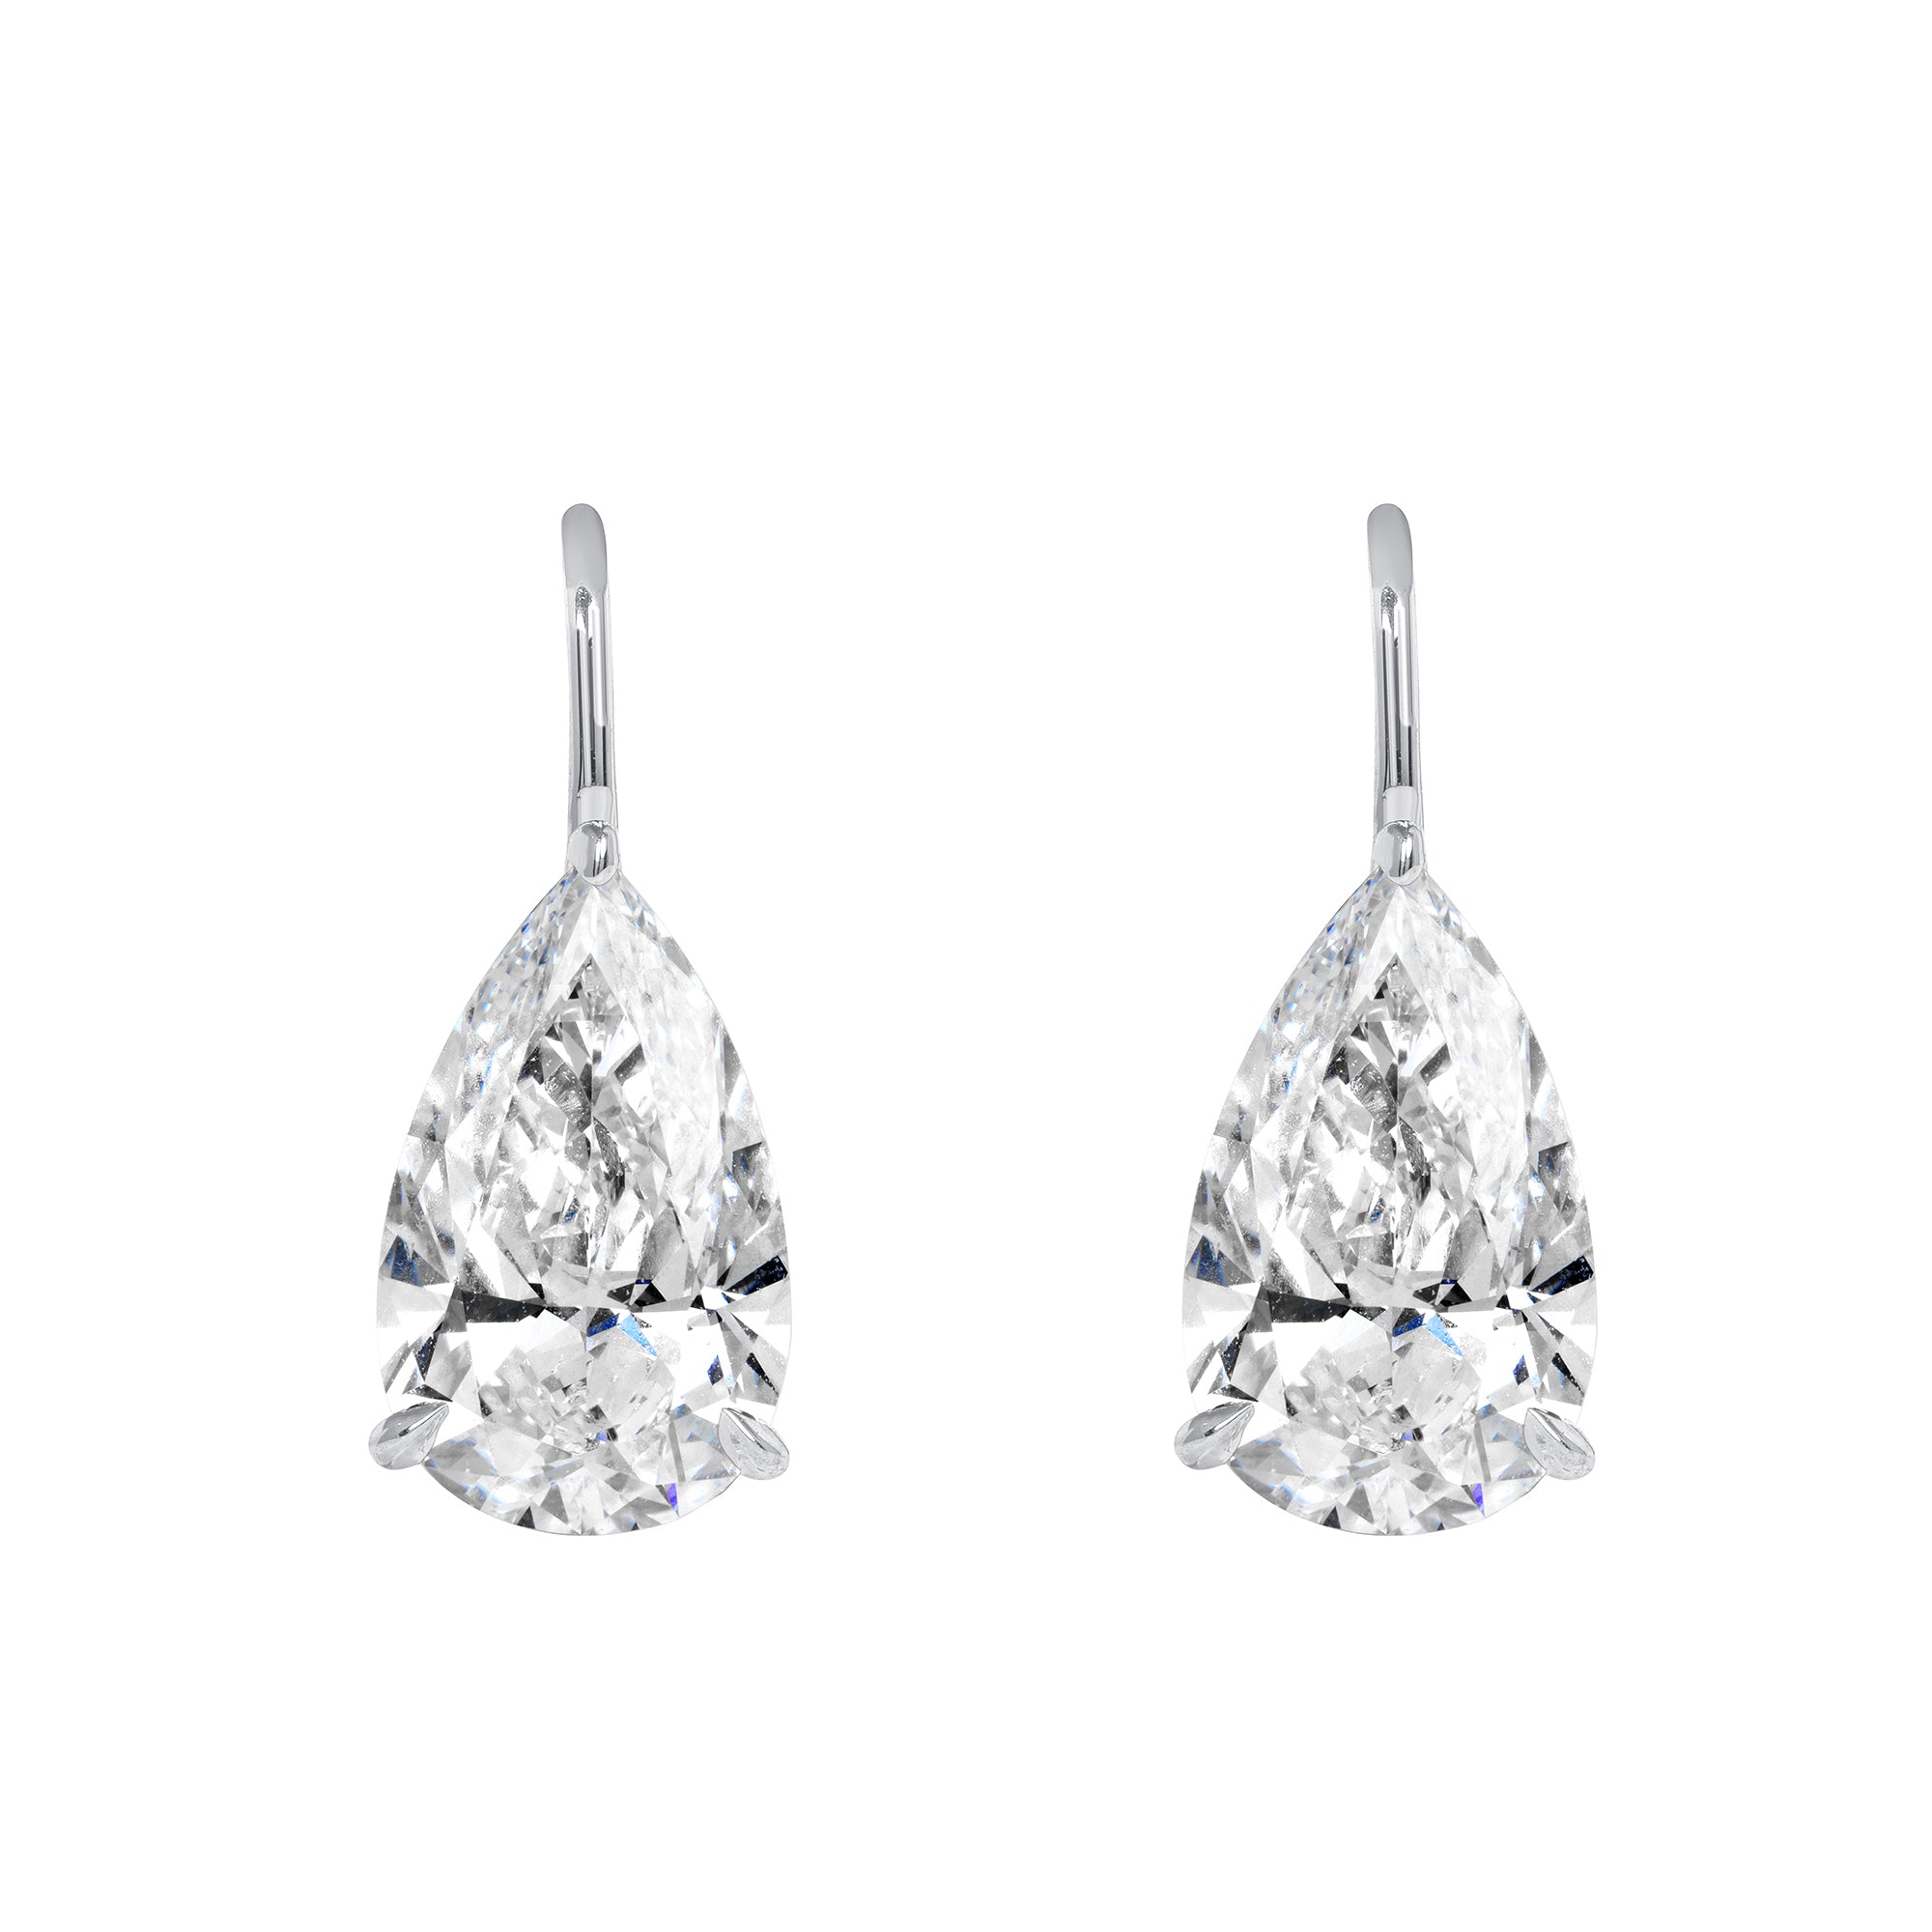 Pear Shaped Diamond Leverback Earrings in 18K White Gold, GIA Certified